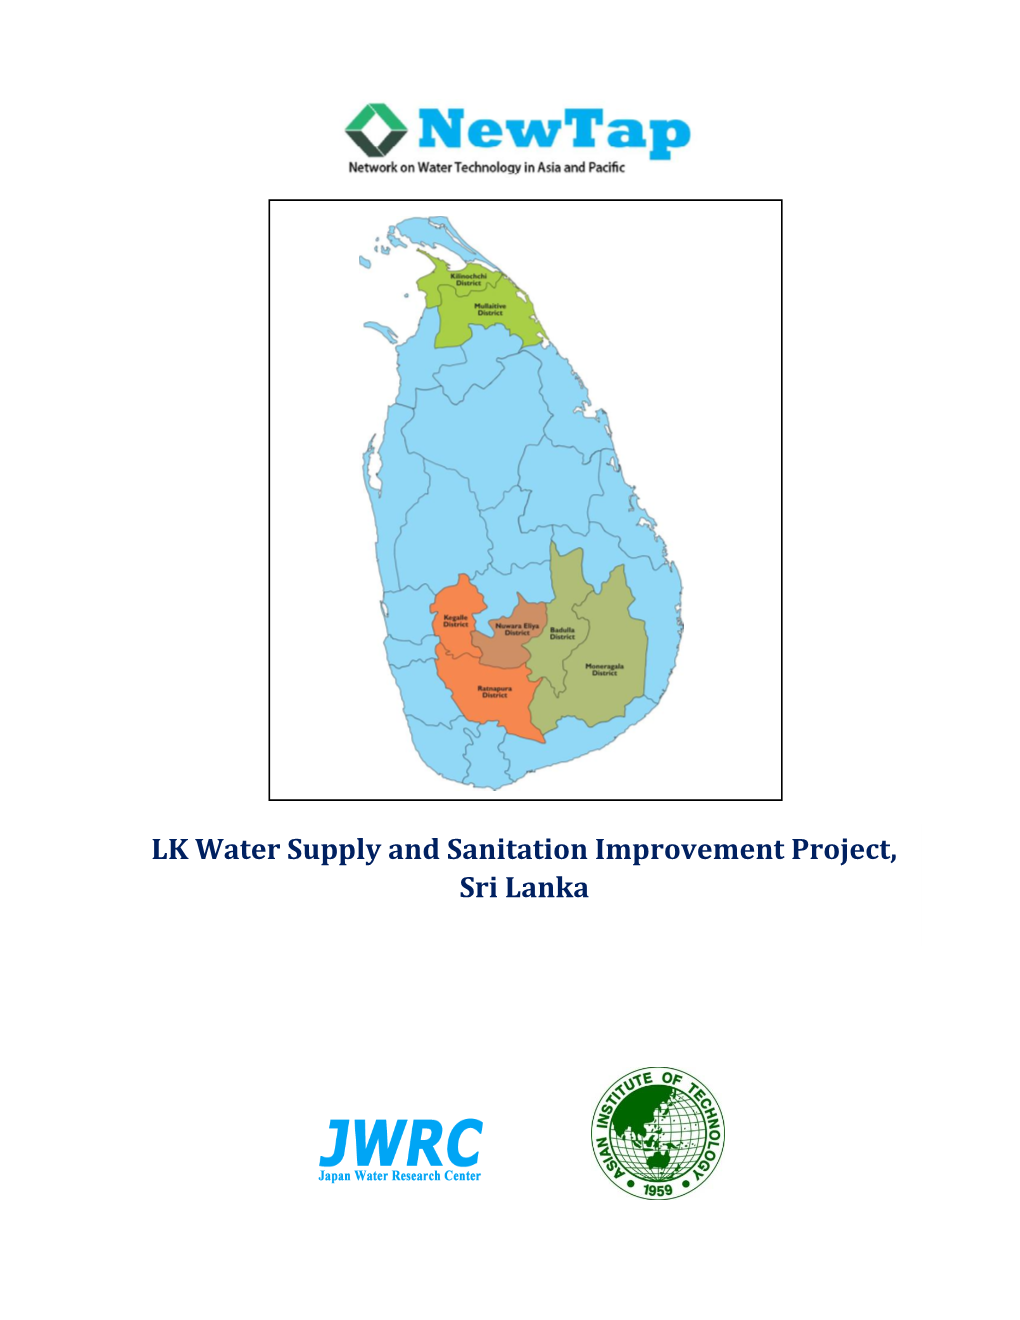 LK Water Supply and Sanitation Improvement Project, Sri Lanka